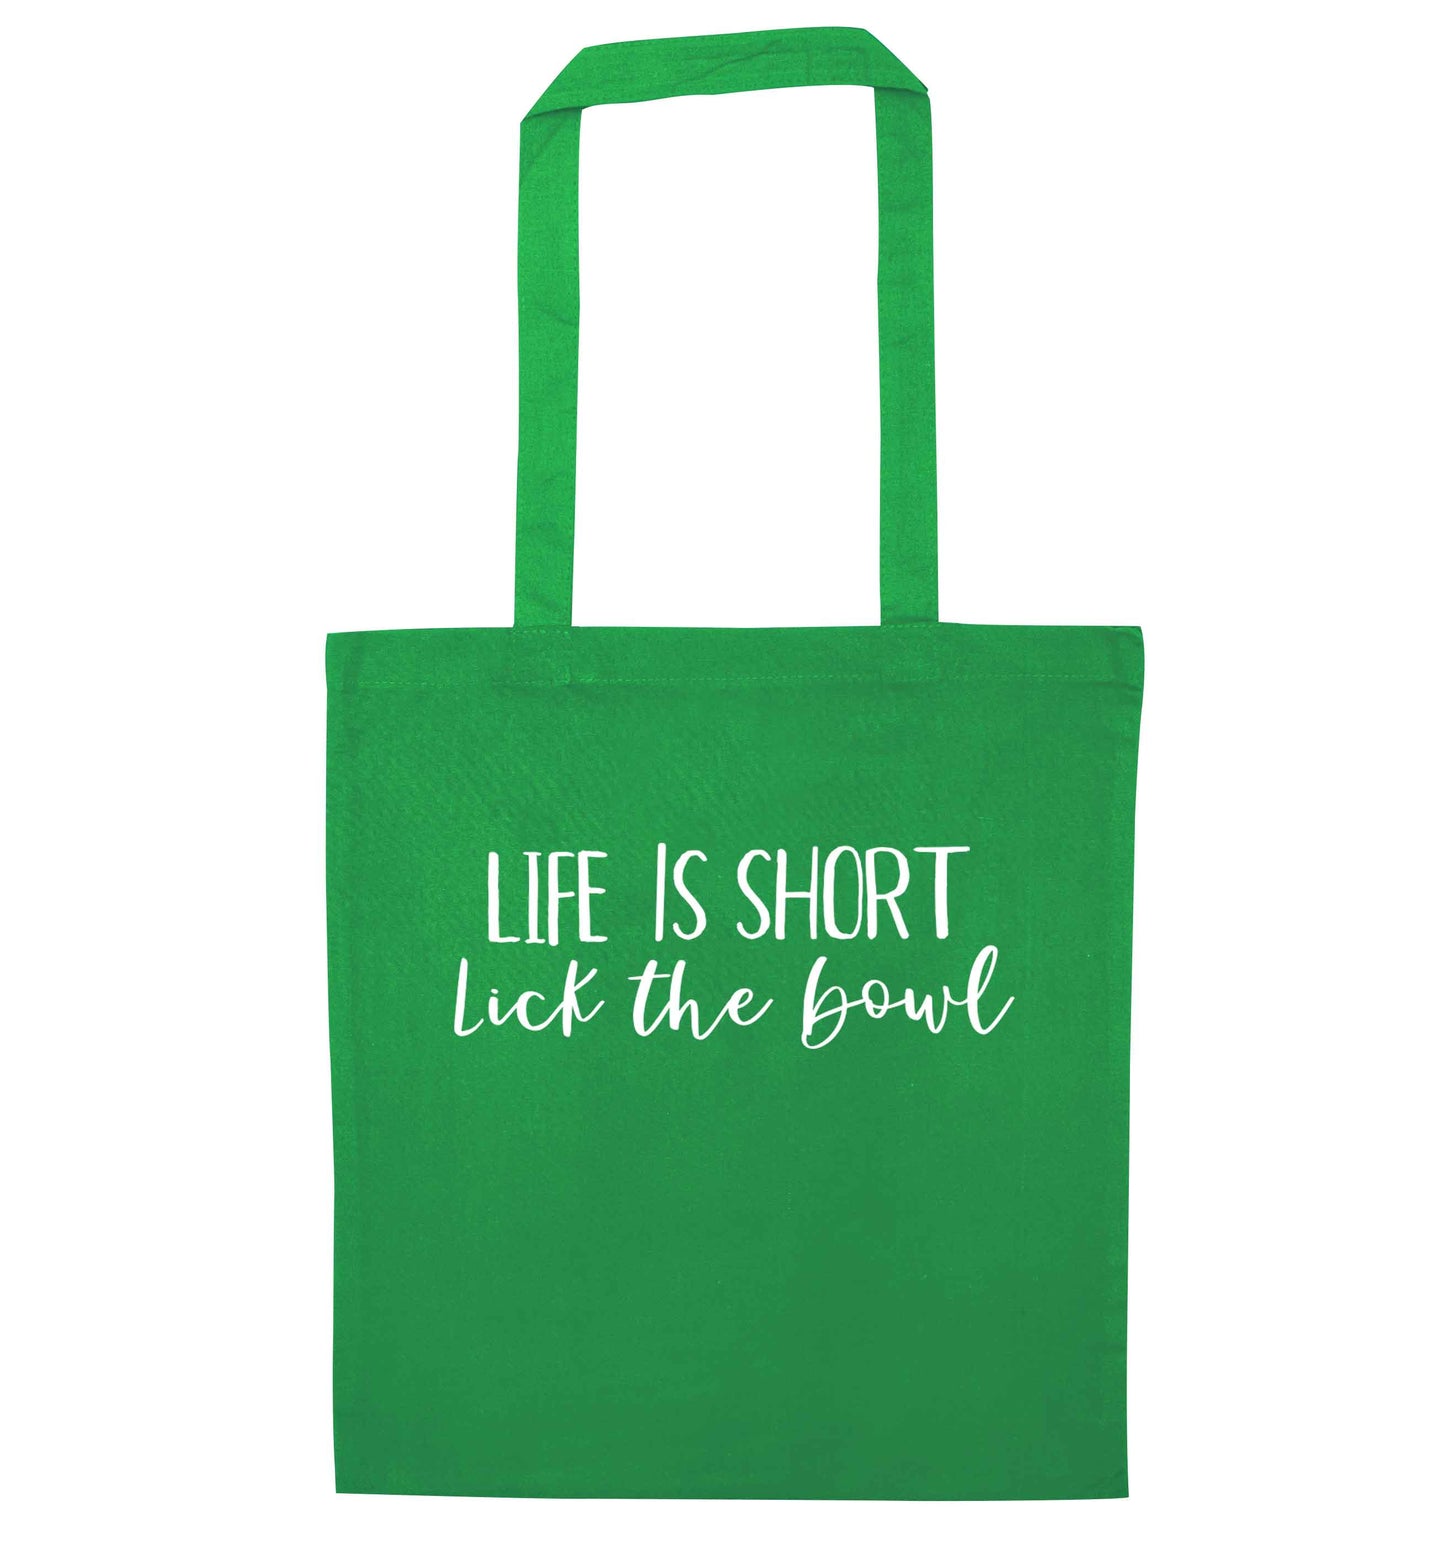 Life is short lick the bowl green tote bag